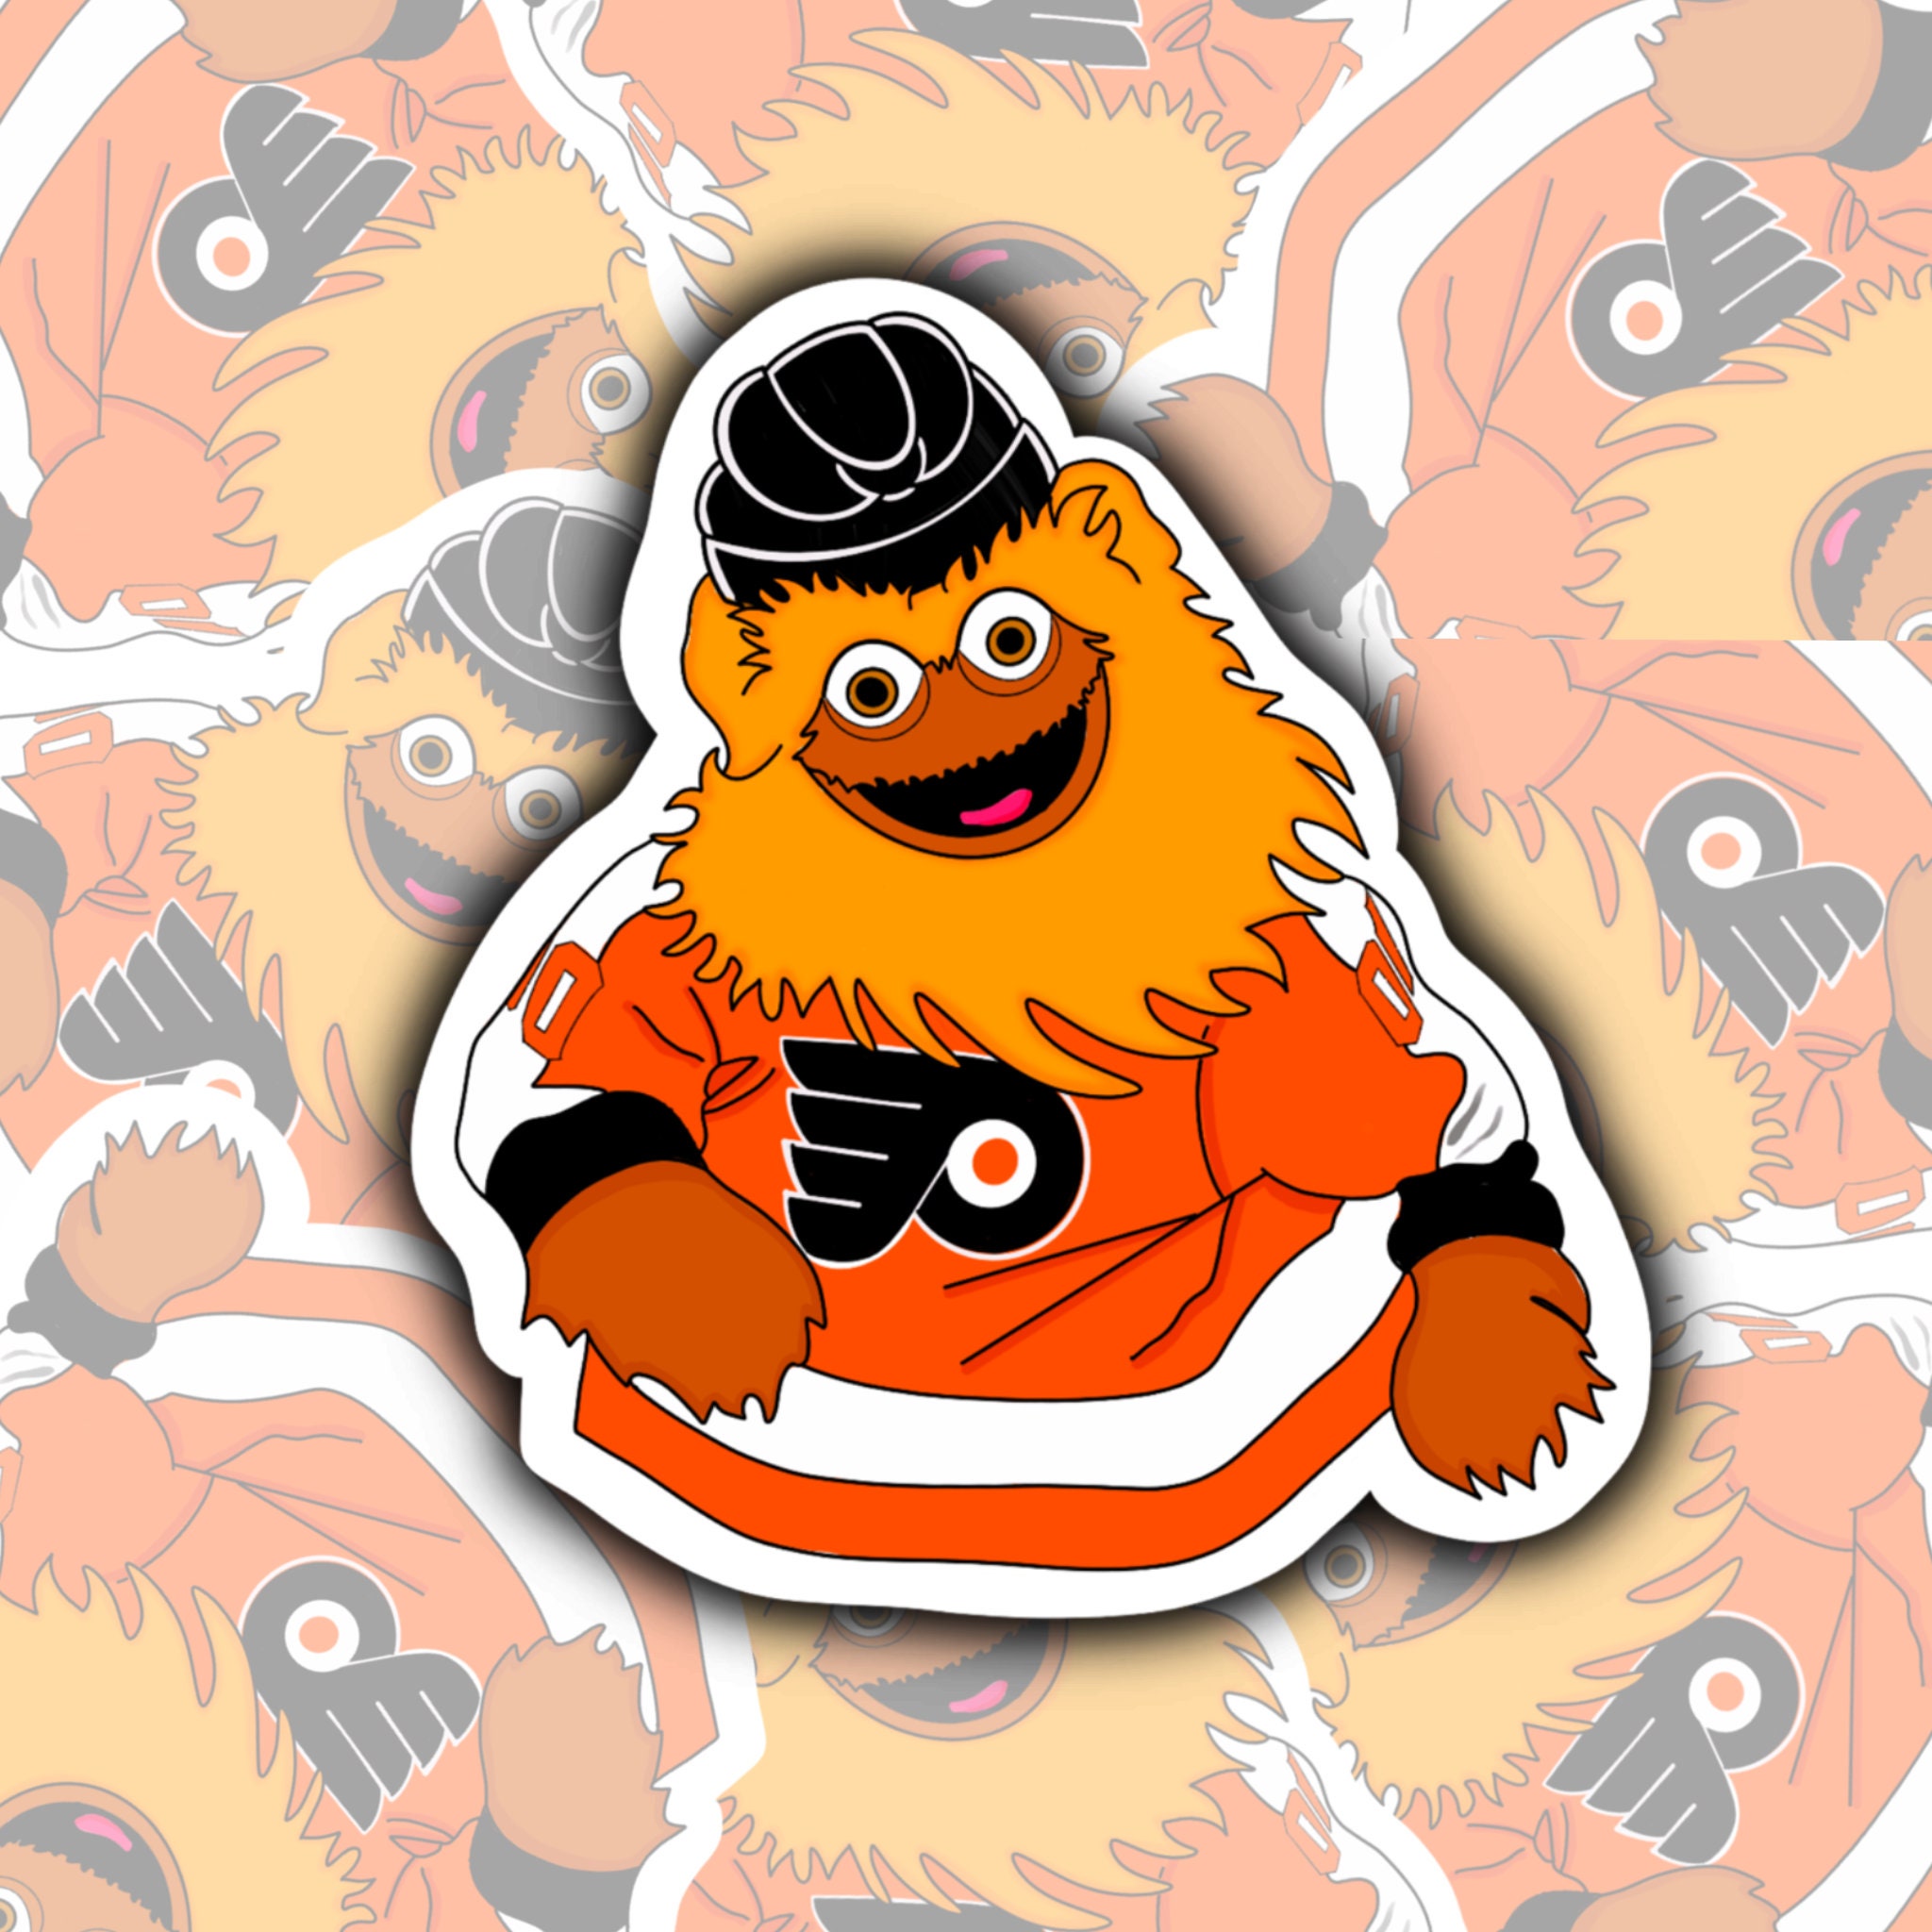 Philadelphia Flyers Mascot Sticker / Vinyl Decal, Gritty Mascot Stick